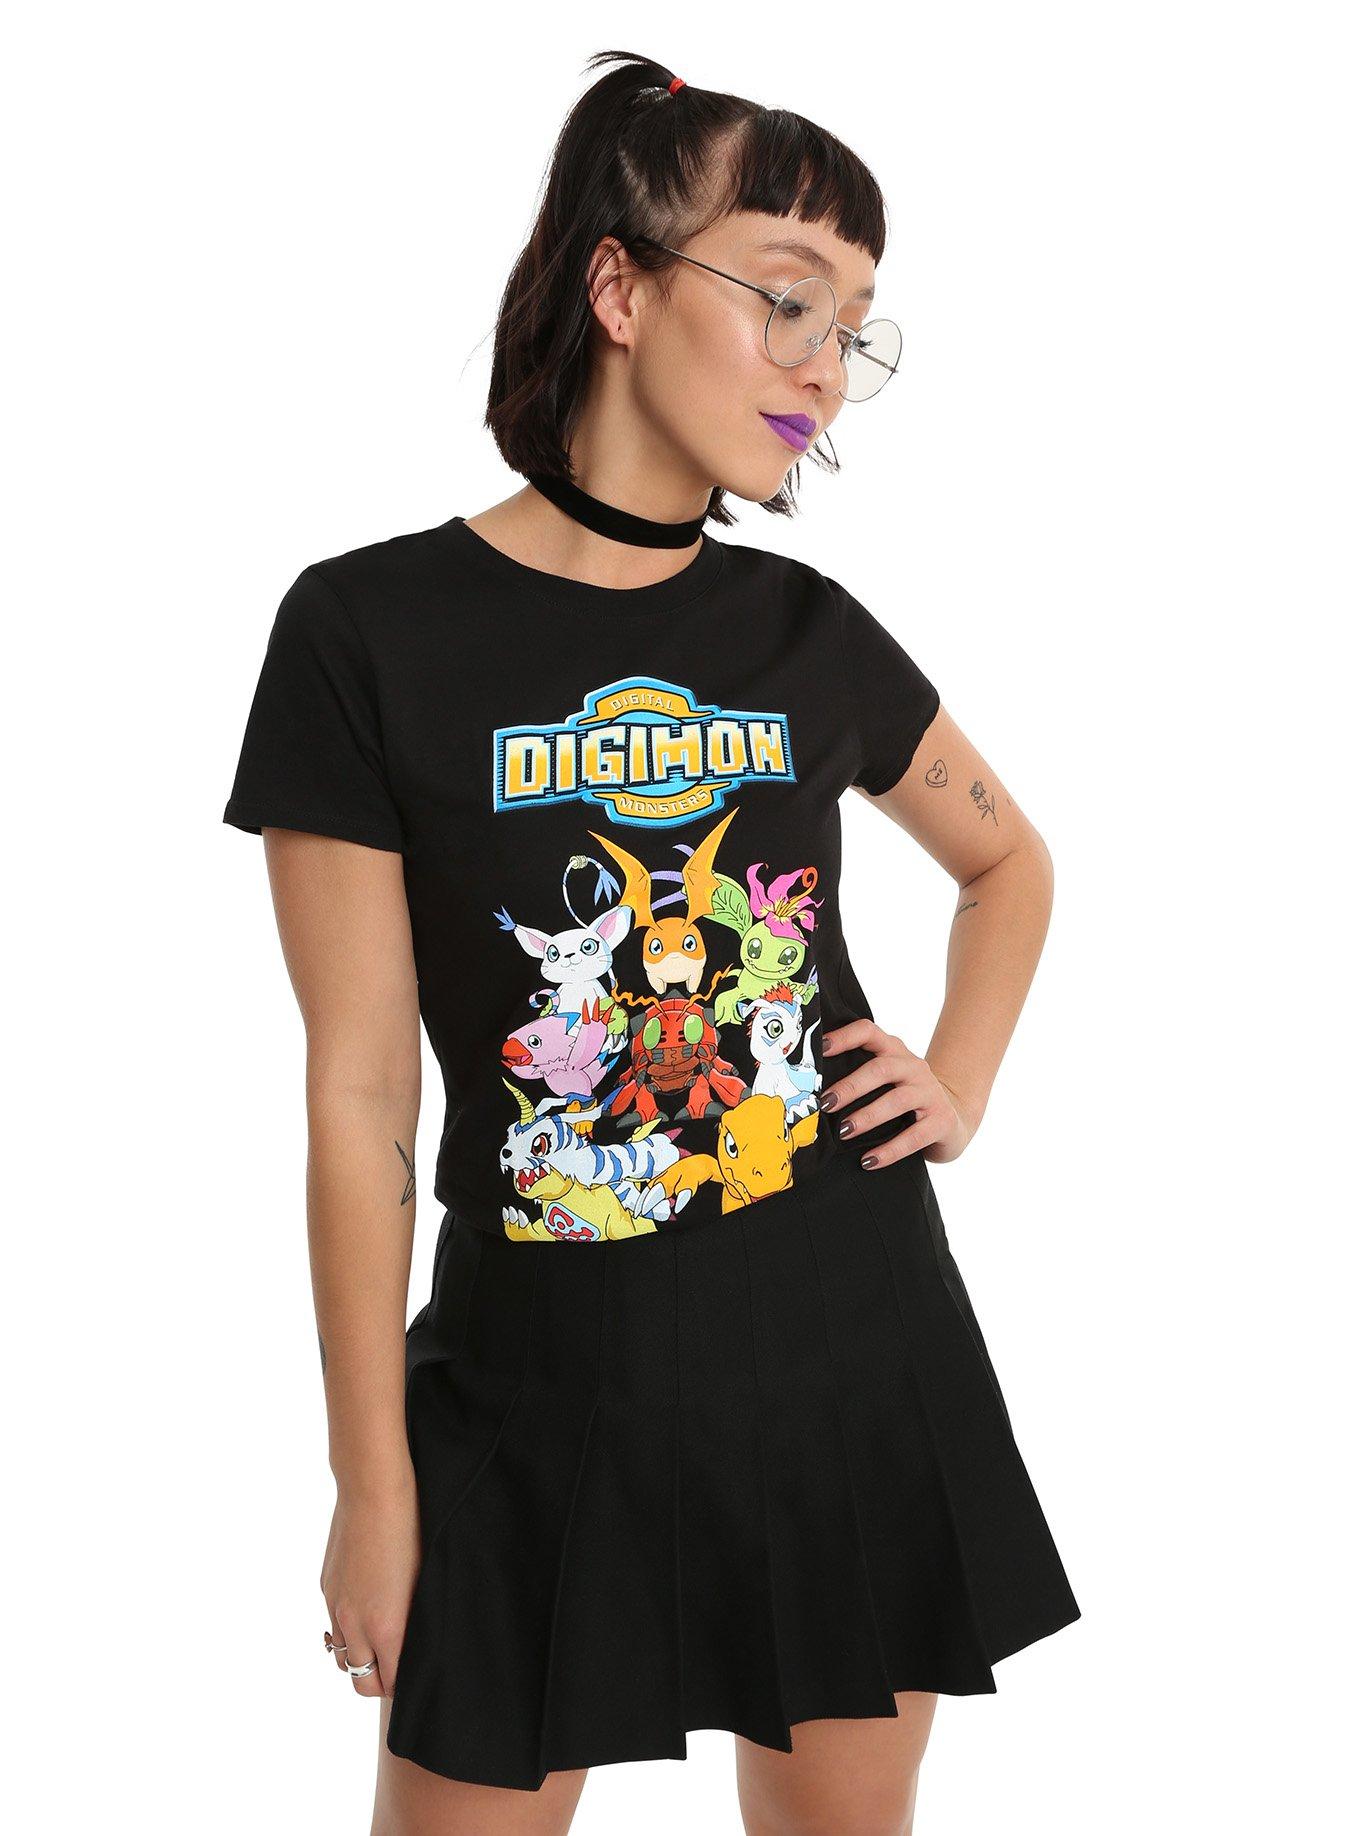 Digimon Digital Monsters Character Girls T-Shirt, BLACK, hi-res